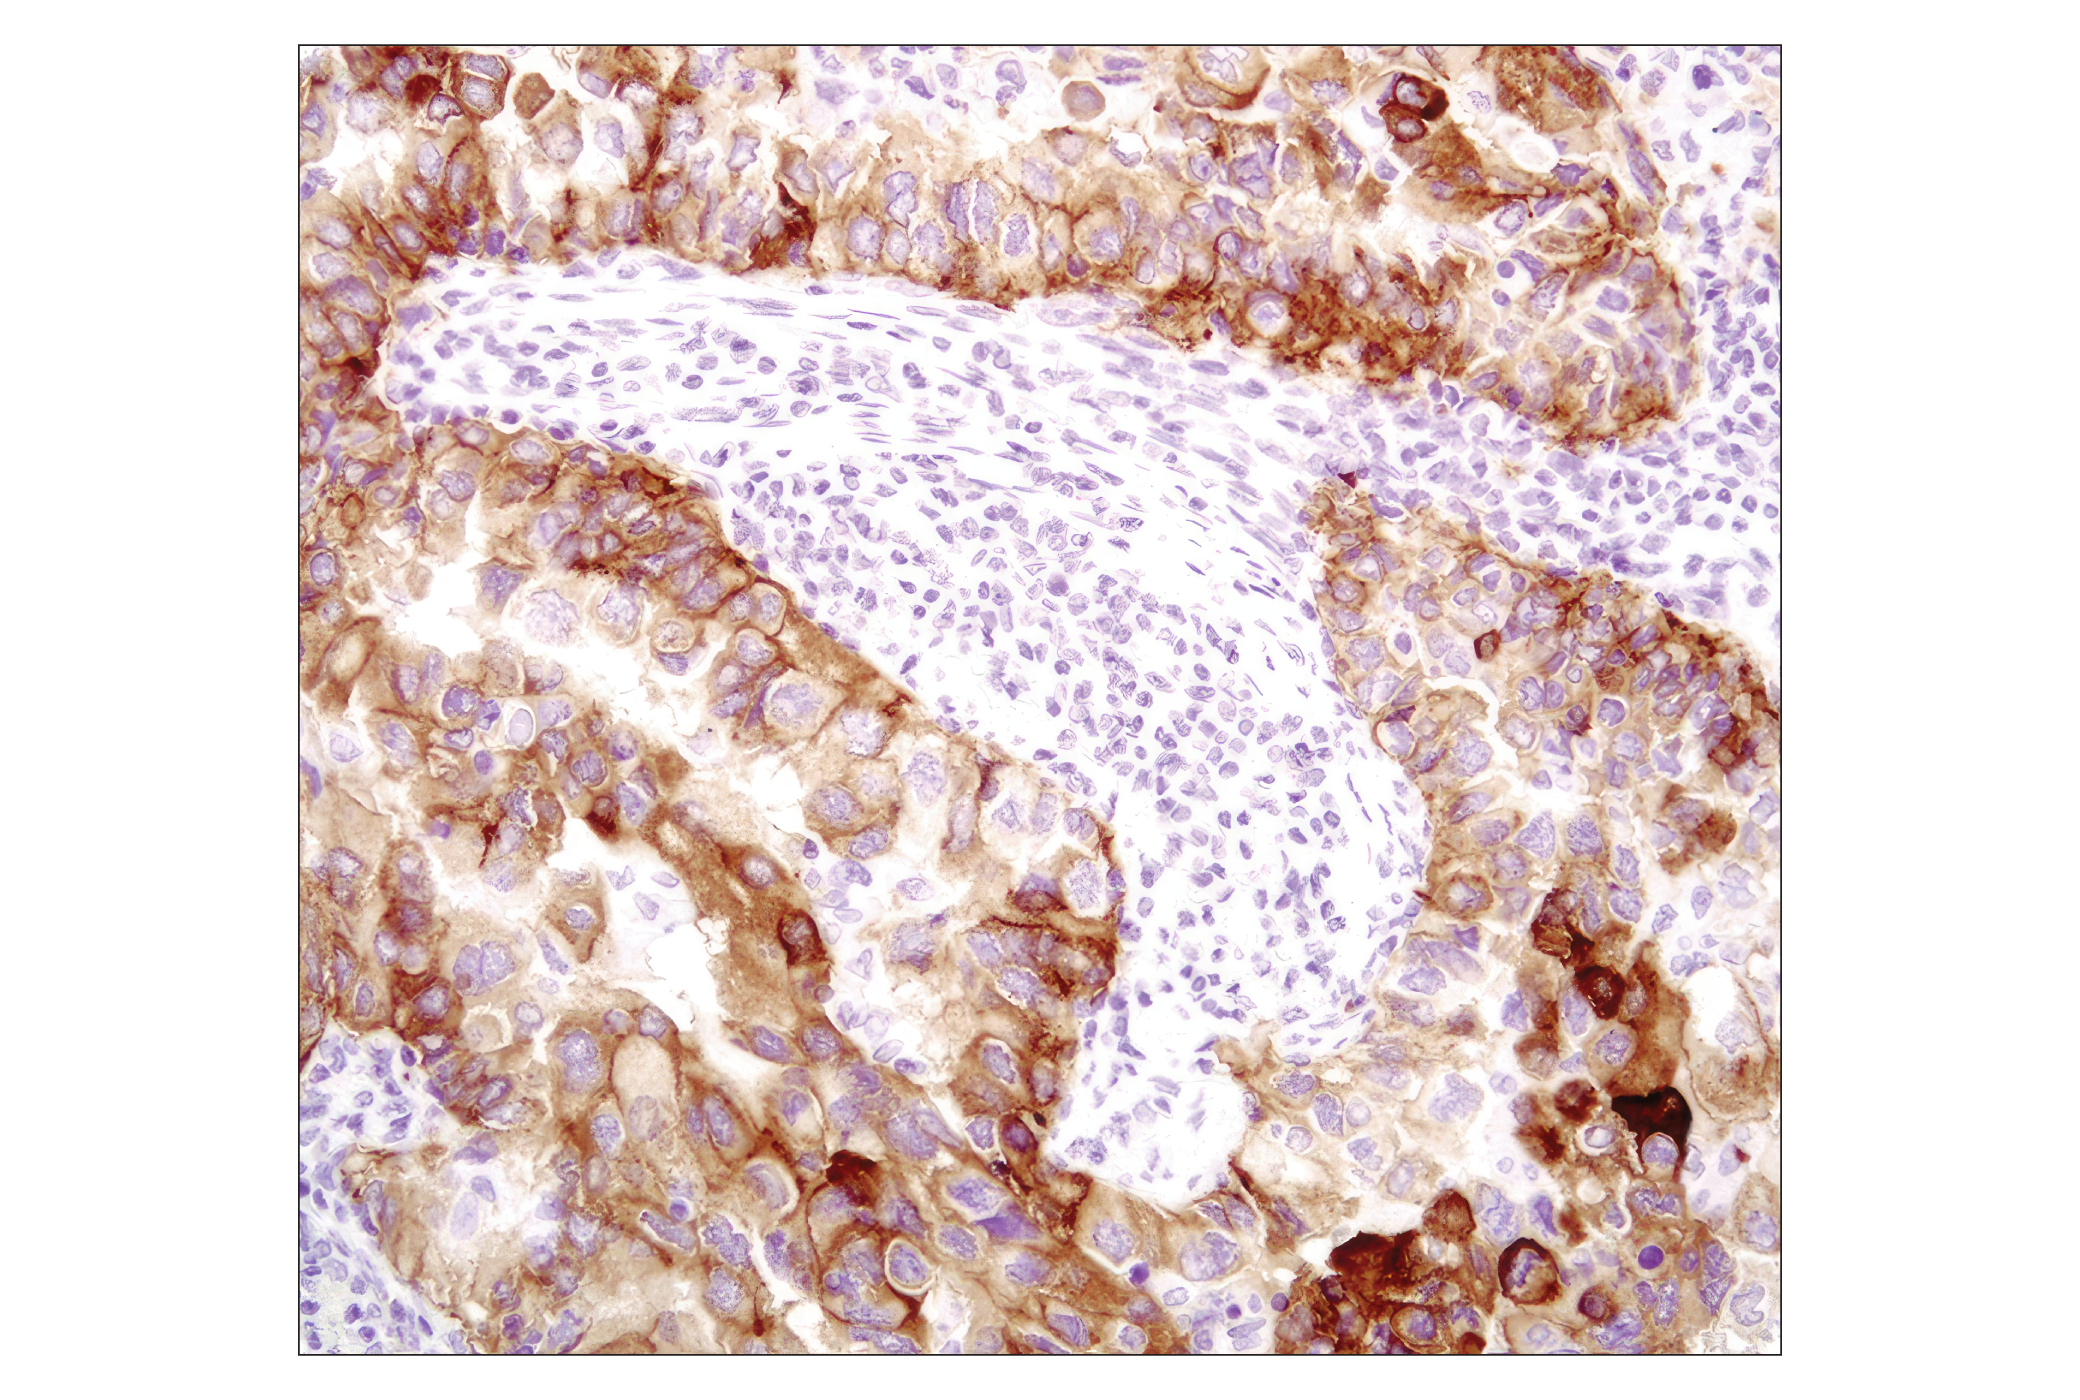  Image 13: PhosphoPlus® EGFR (Tyr1068) Antibody Duet